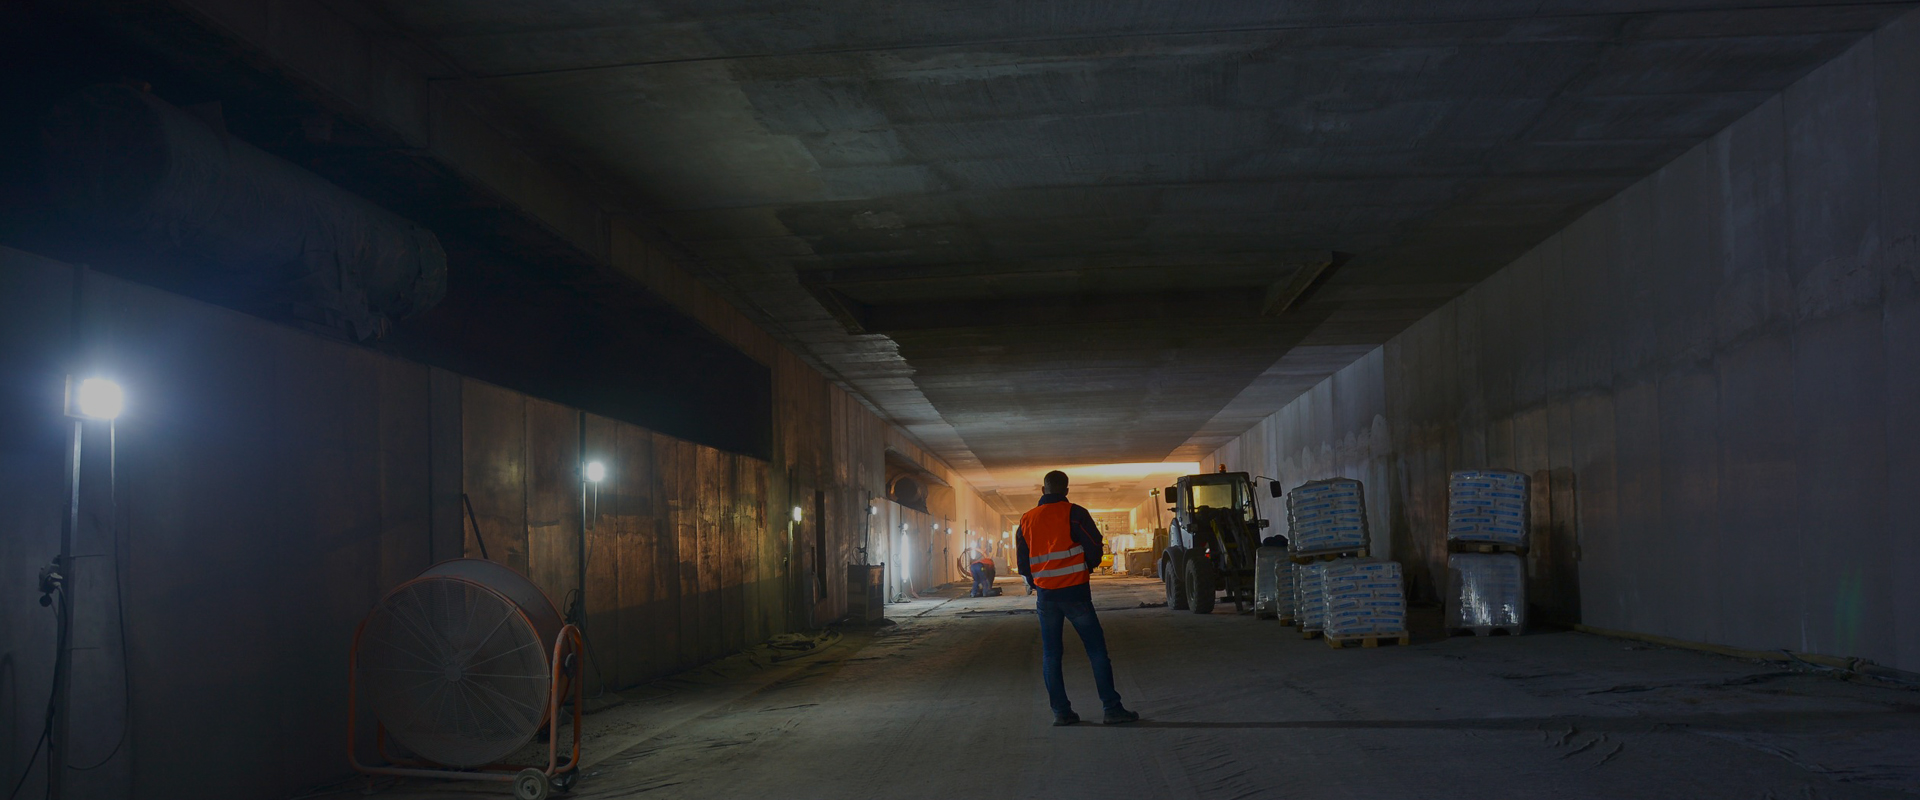 Instandsetzung des Wallringtunnels in der Hamburger Innenstadt